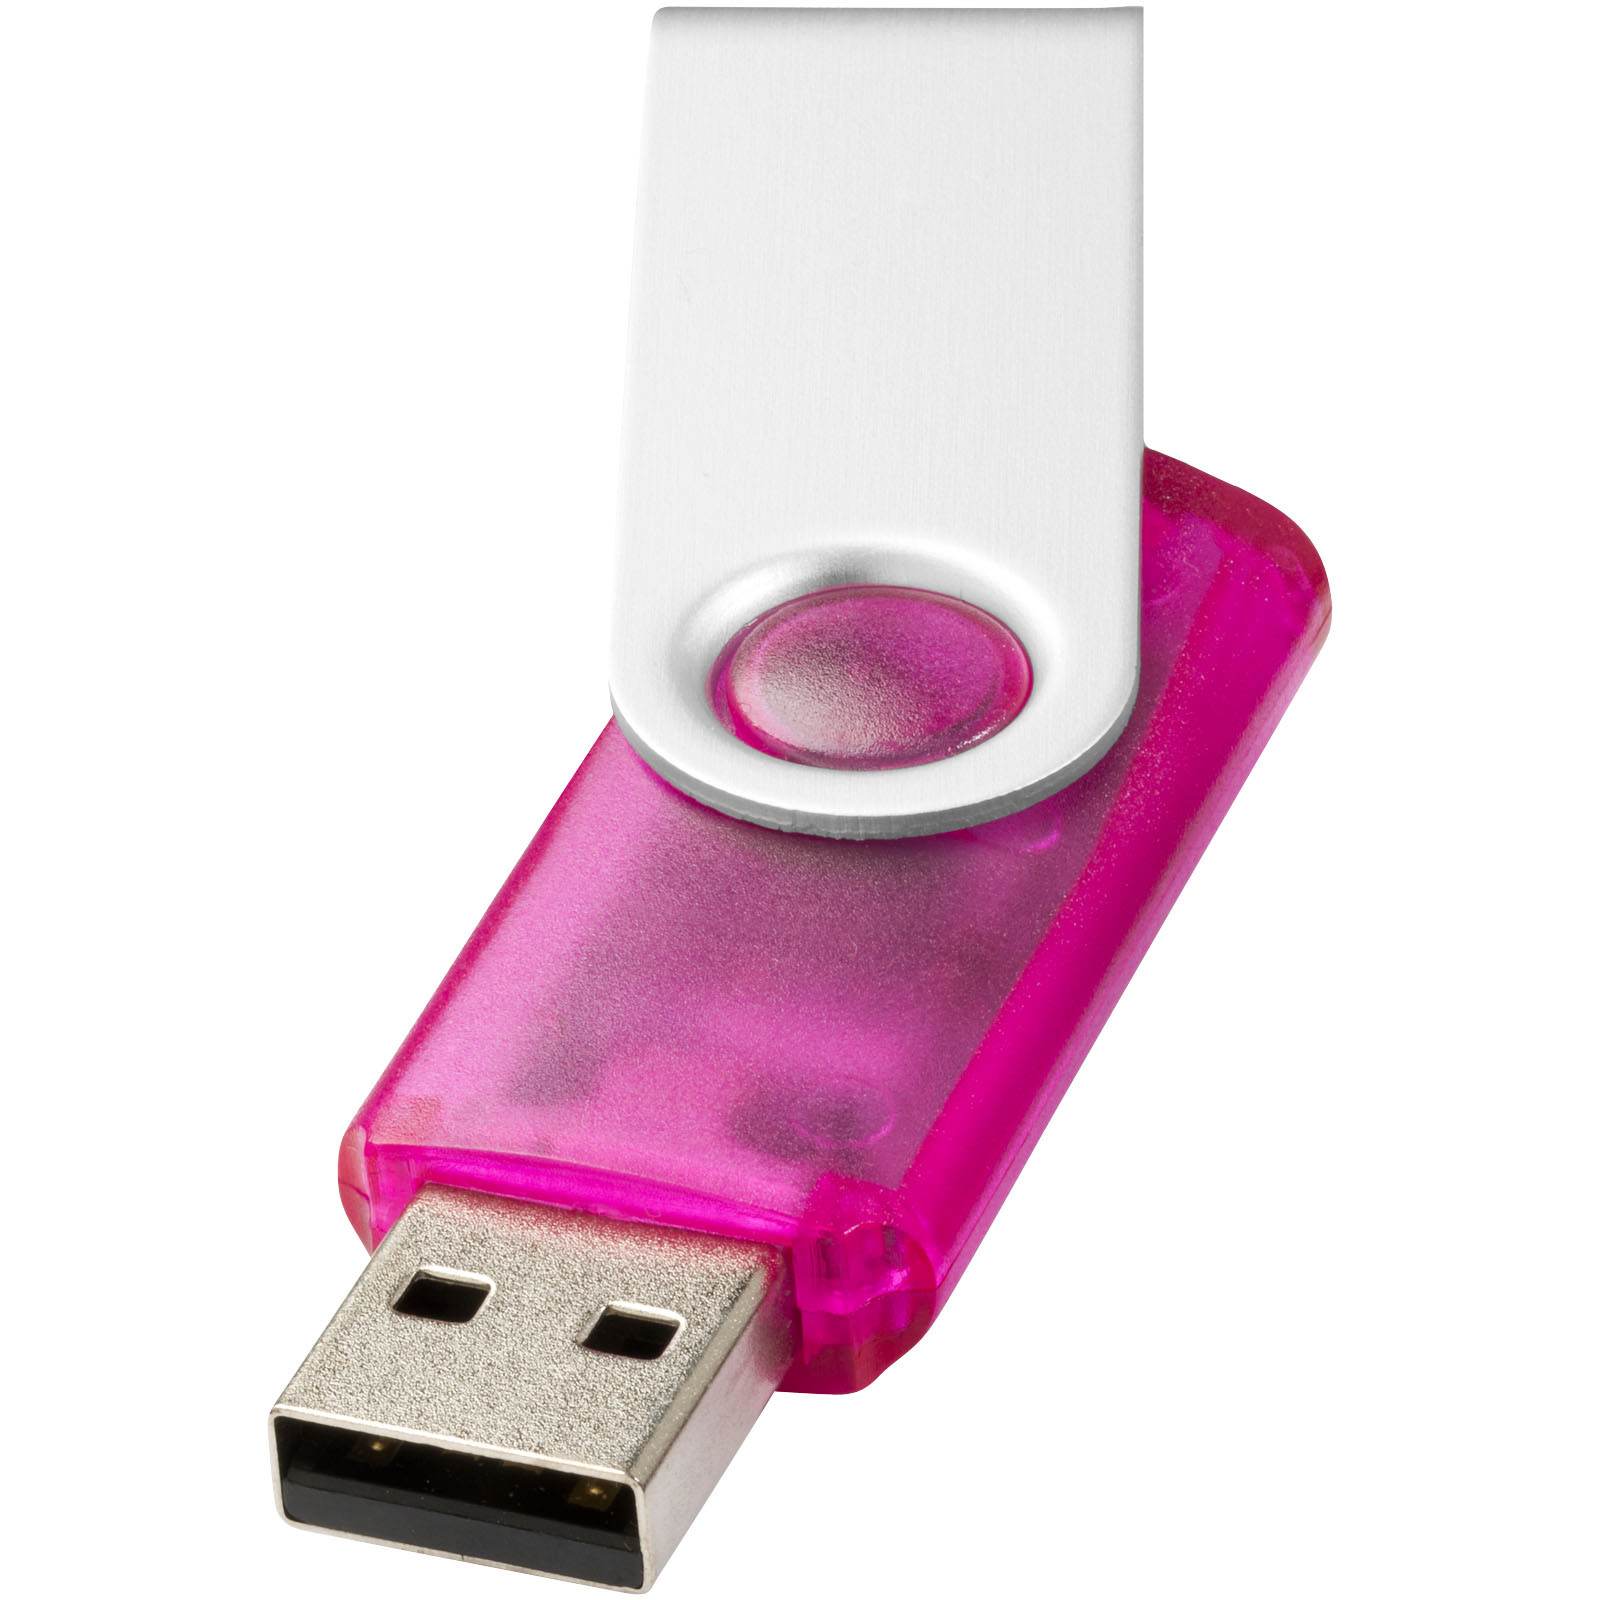 Memoria USB giratoria y translúcida de 4GB - Carral